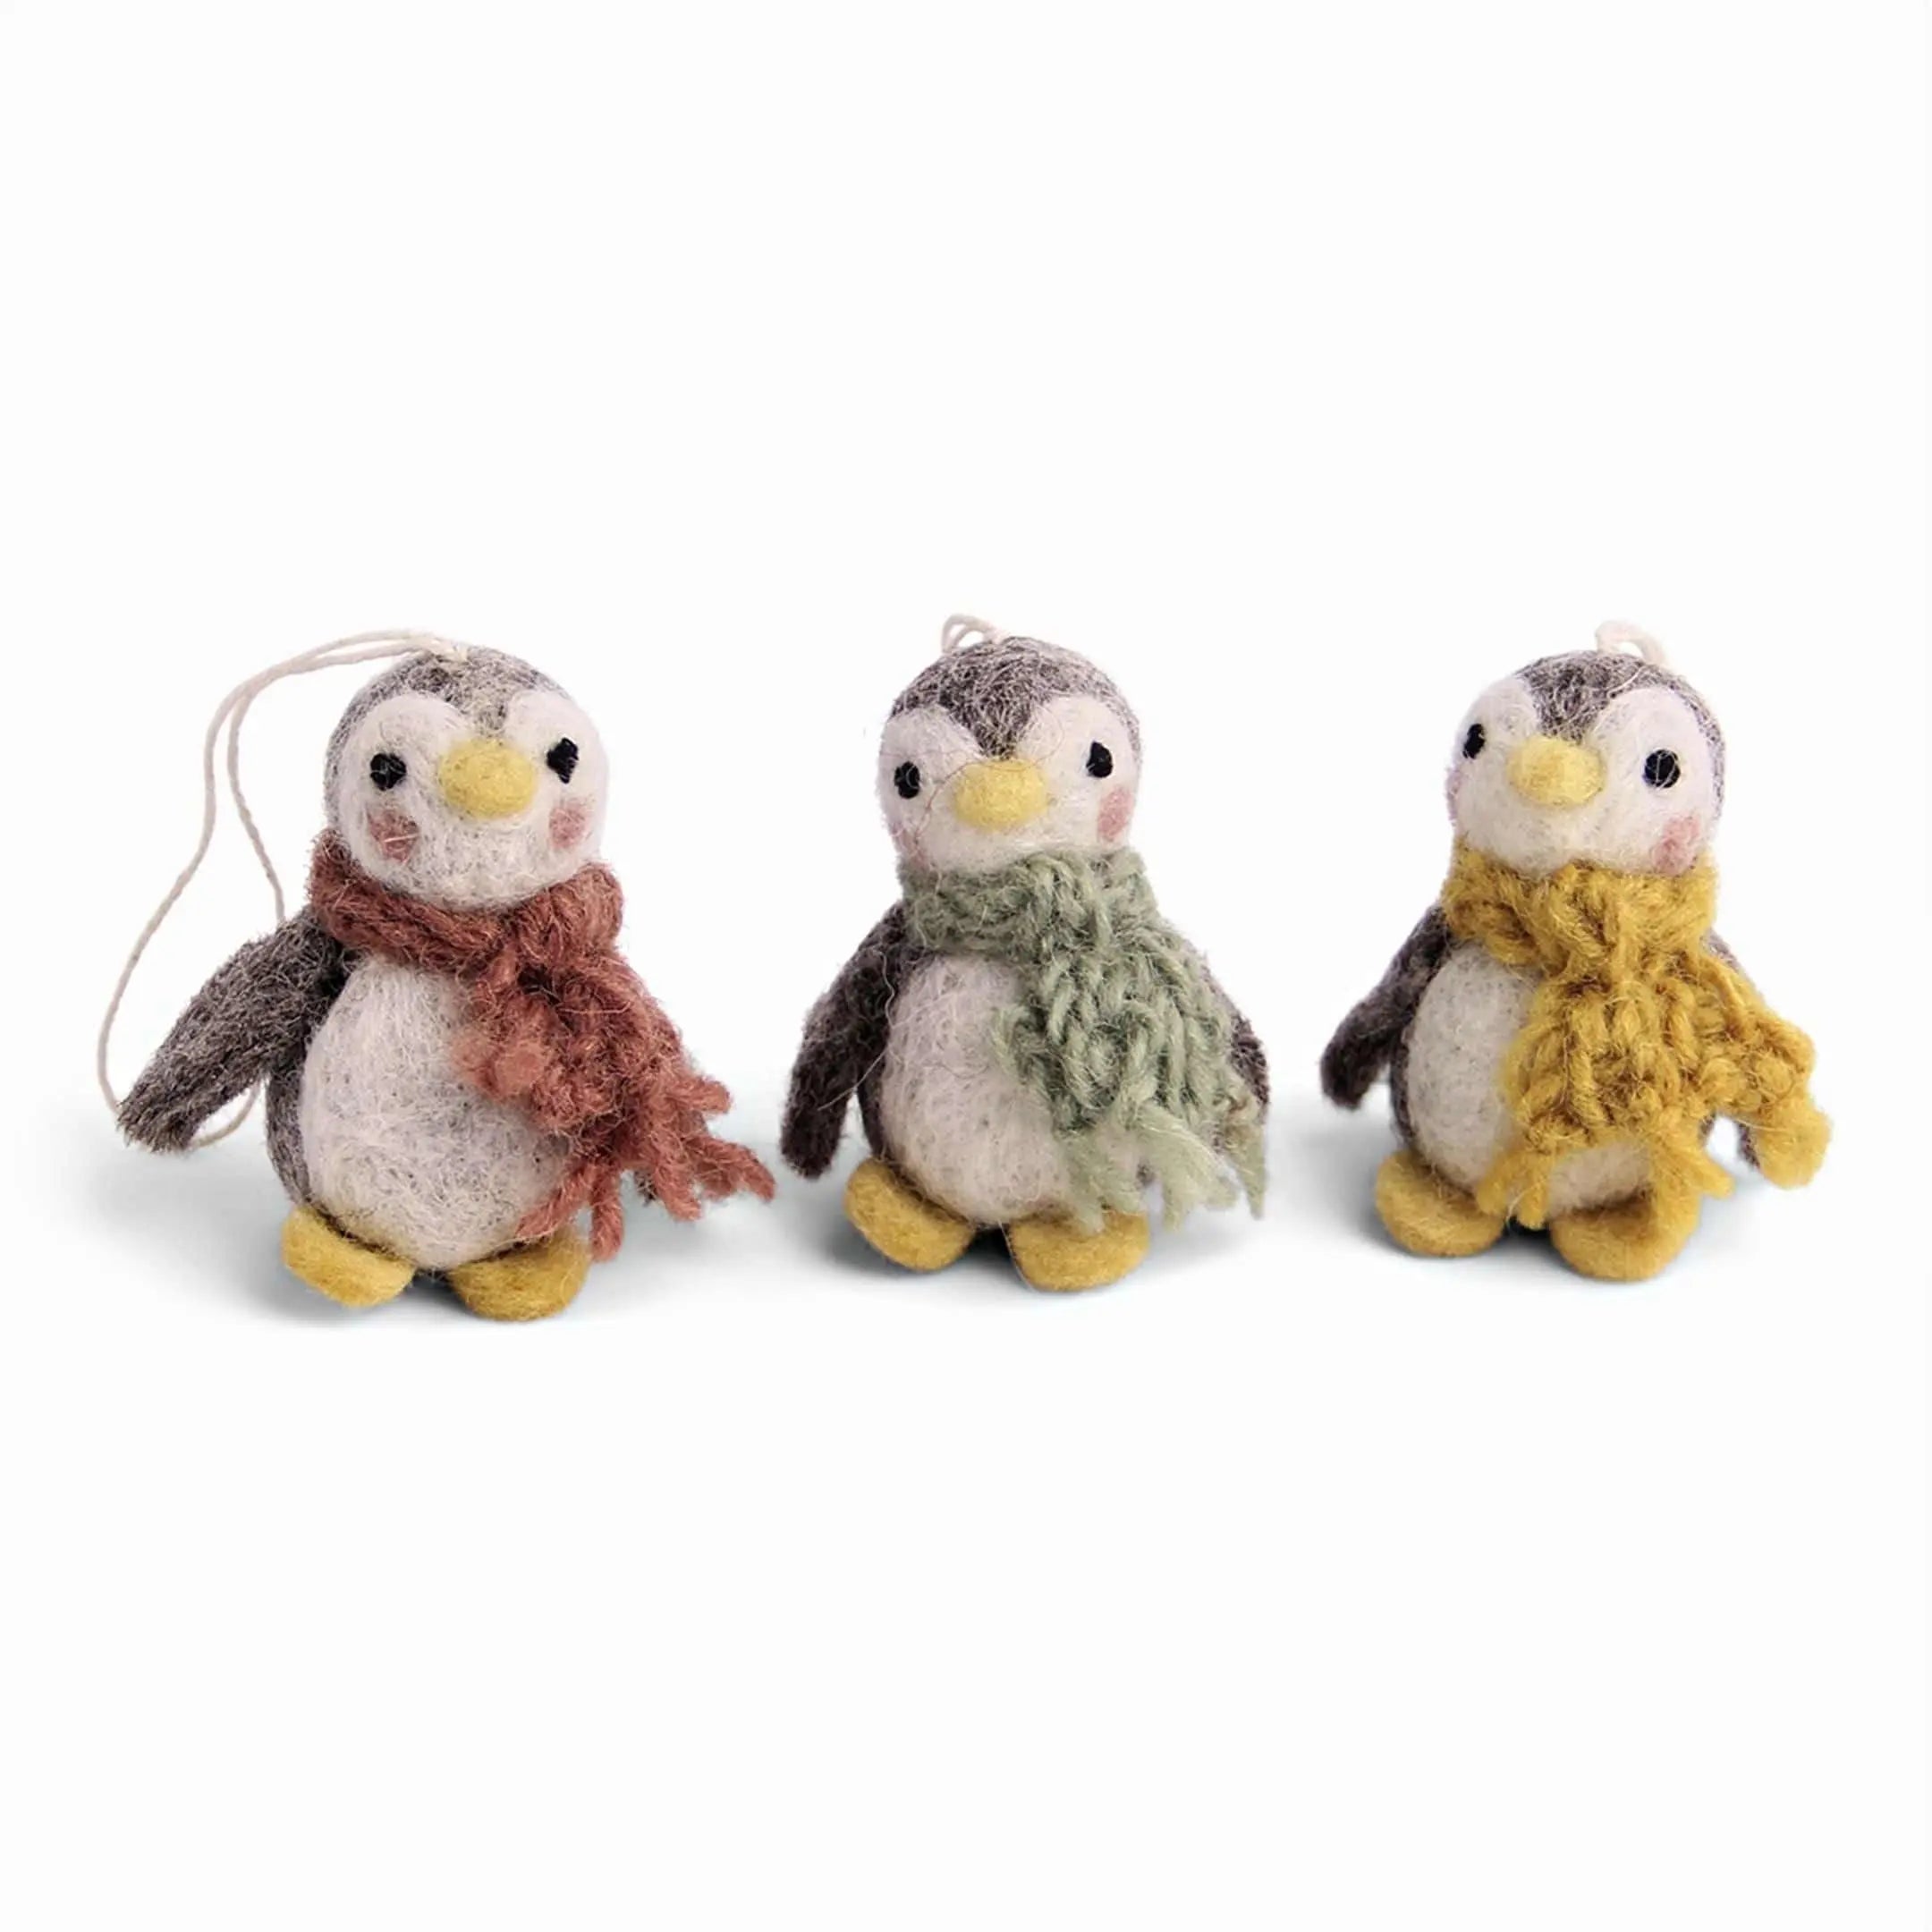 Gry & Sif Pinguine 3er Filz süße Anhänger – aus Weihnachtsschmuck Set Filzlig